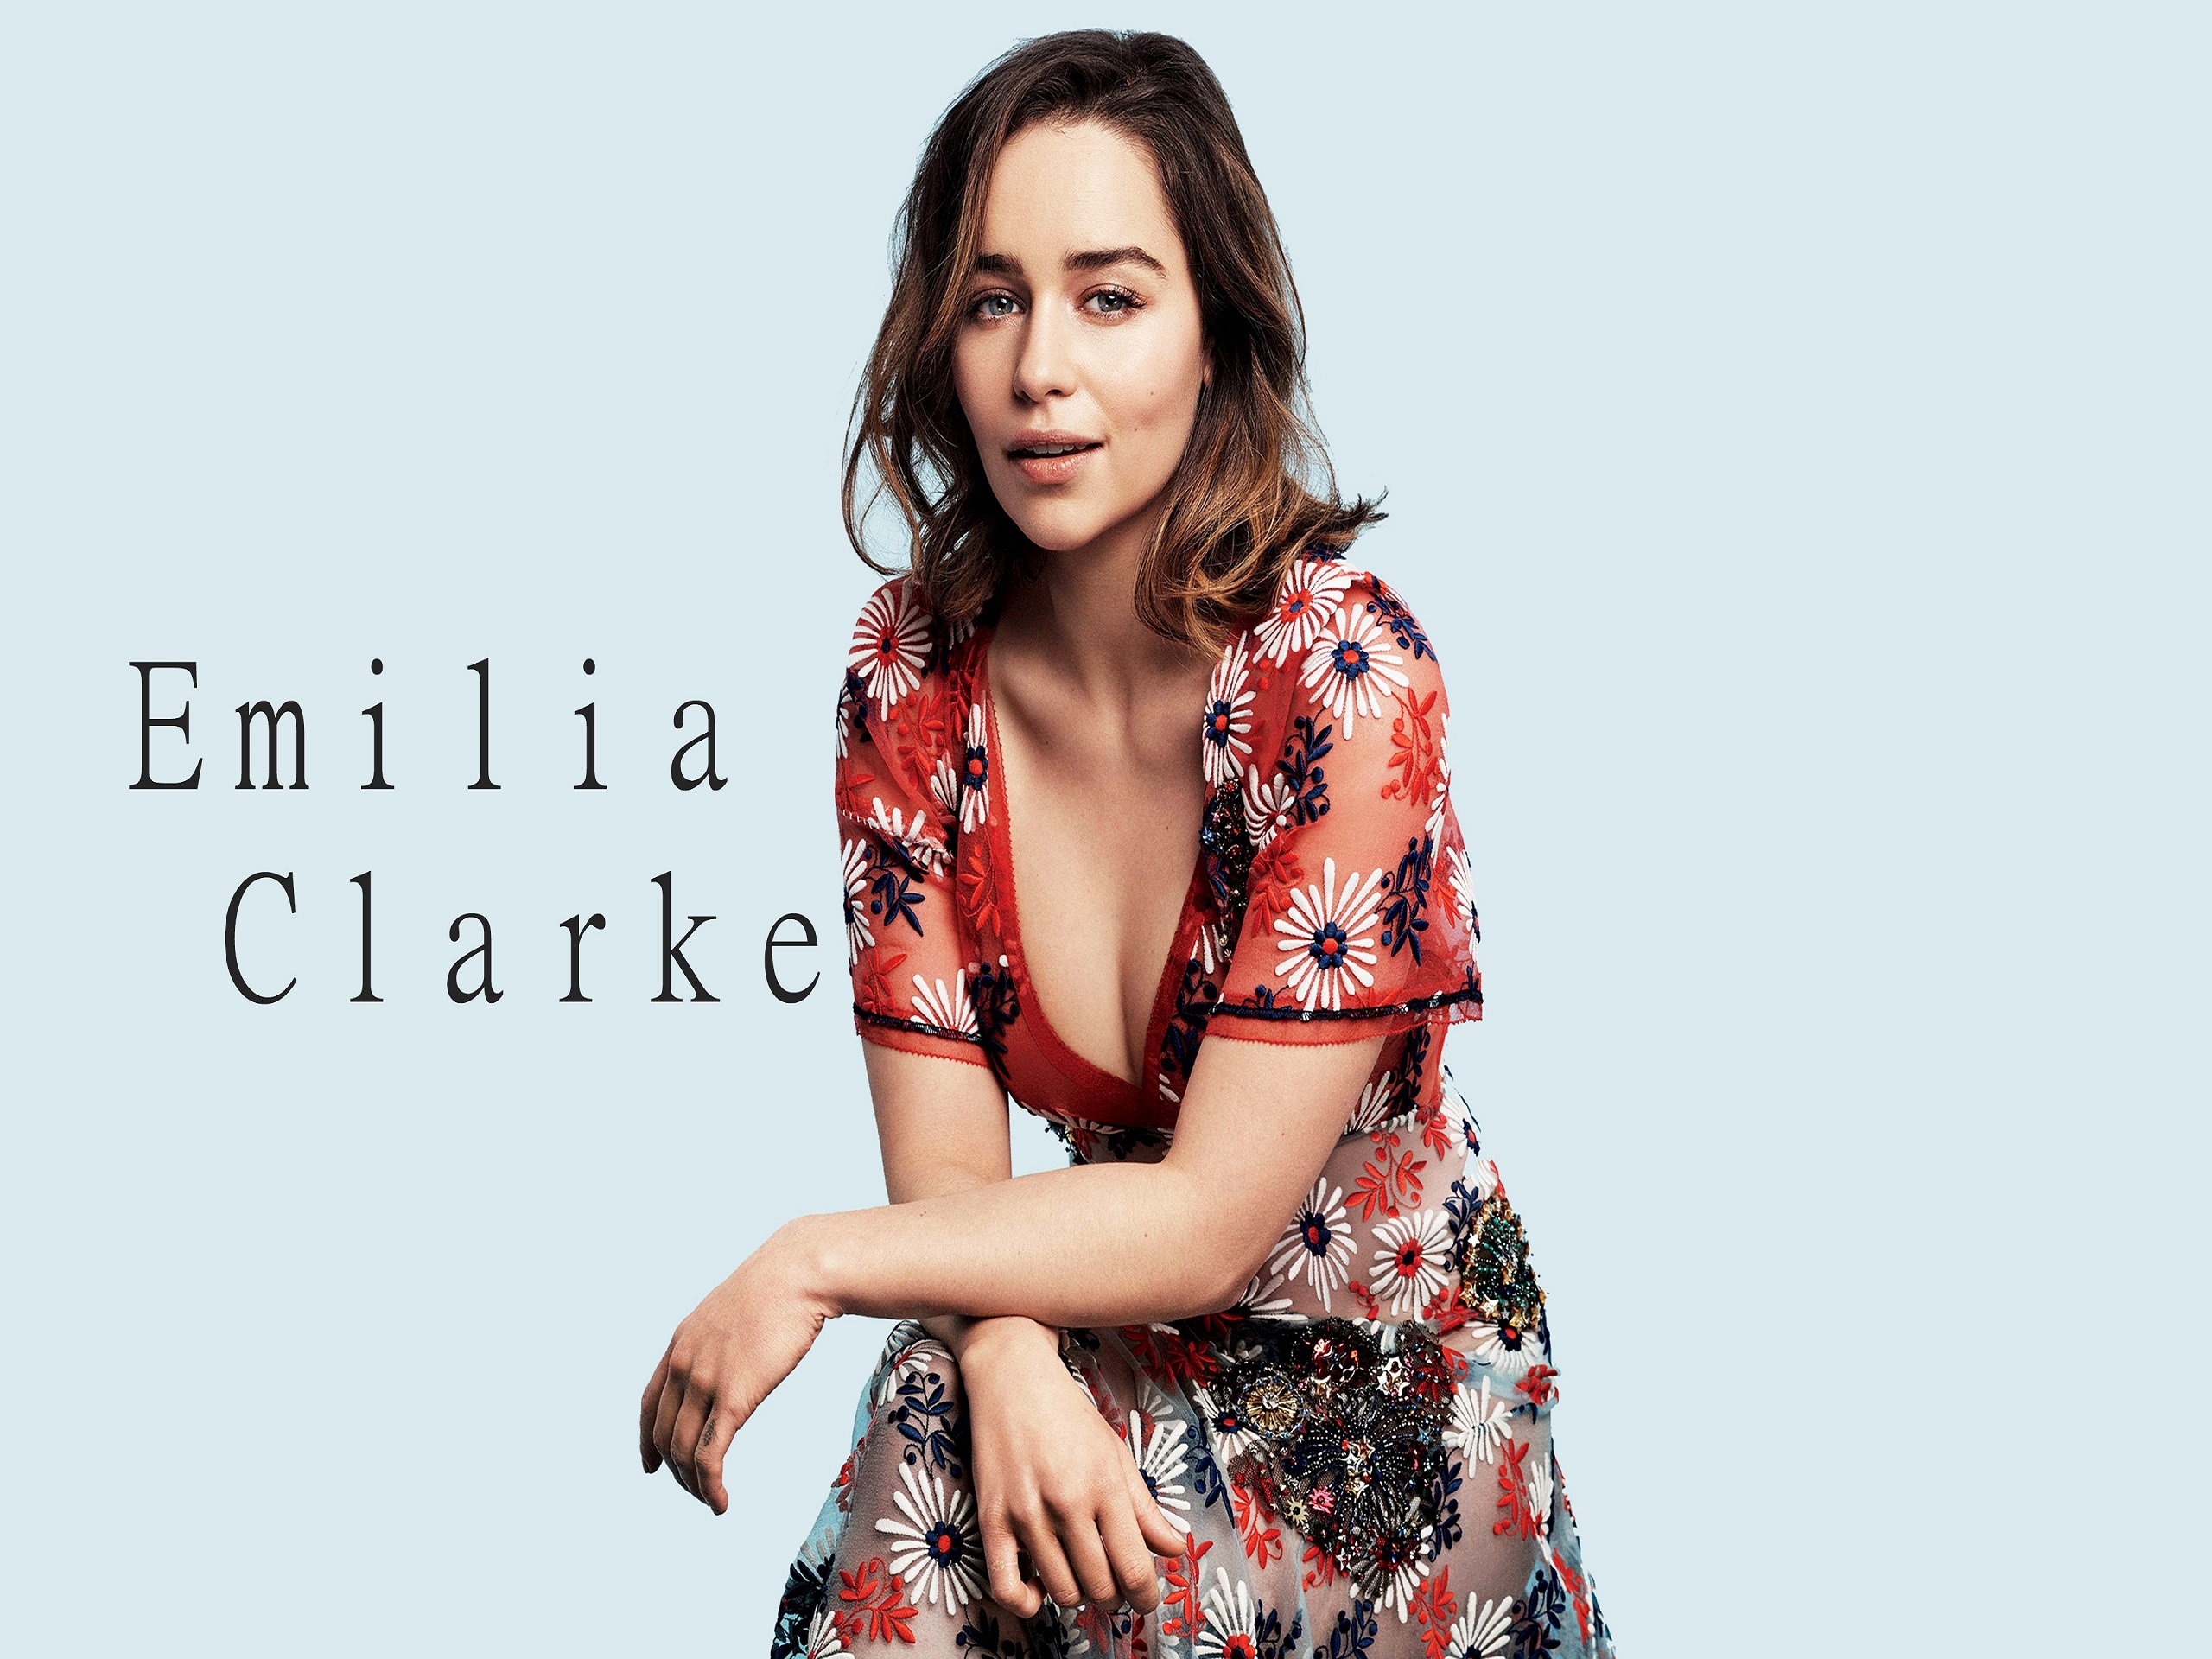 Emilia Clarke 2017 for 2560 x 1920 resolution